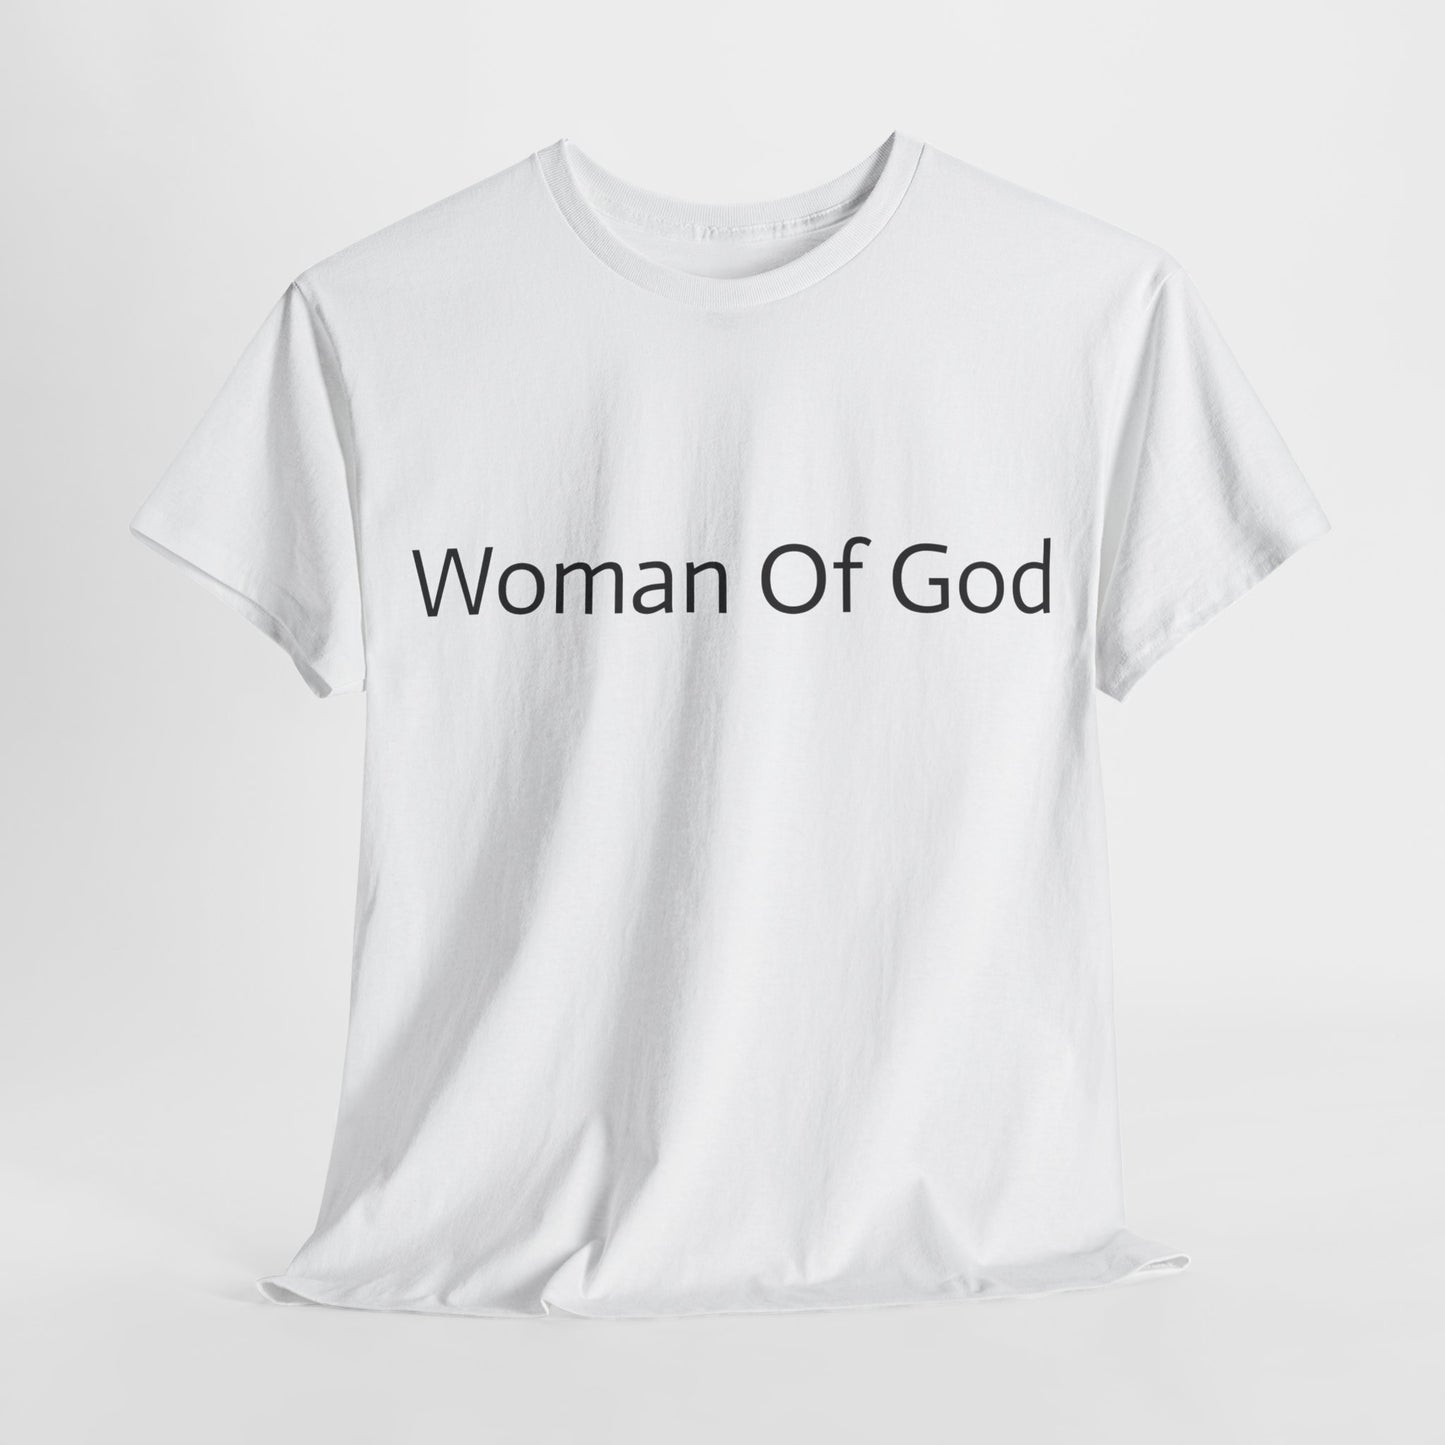 Unisex T-shirt (Woman Of God)